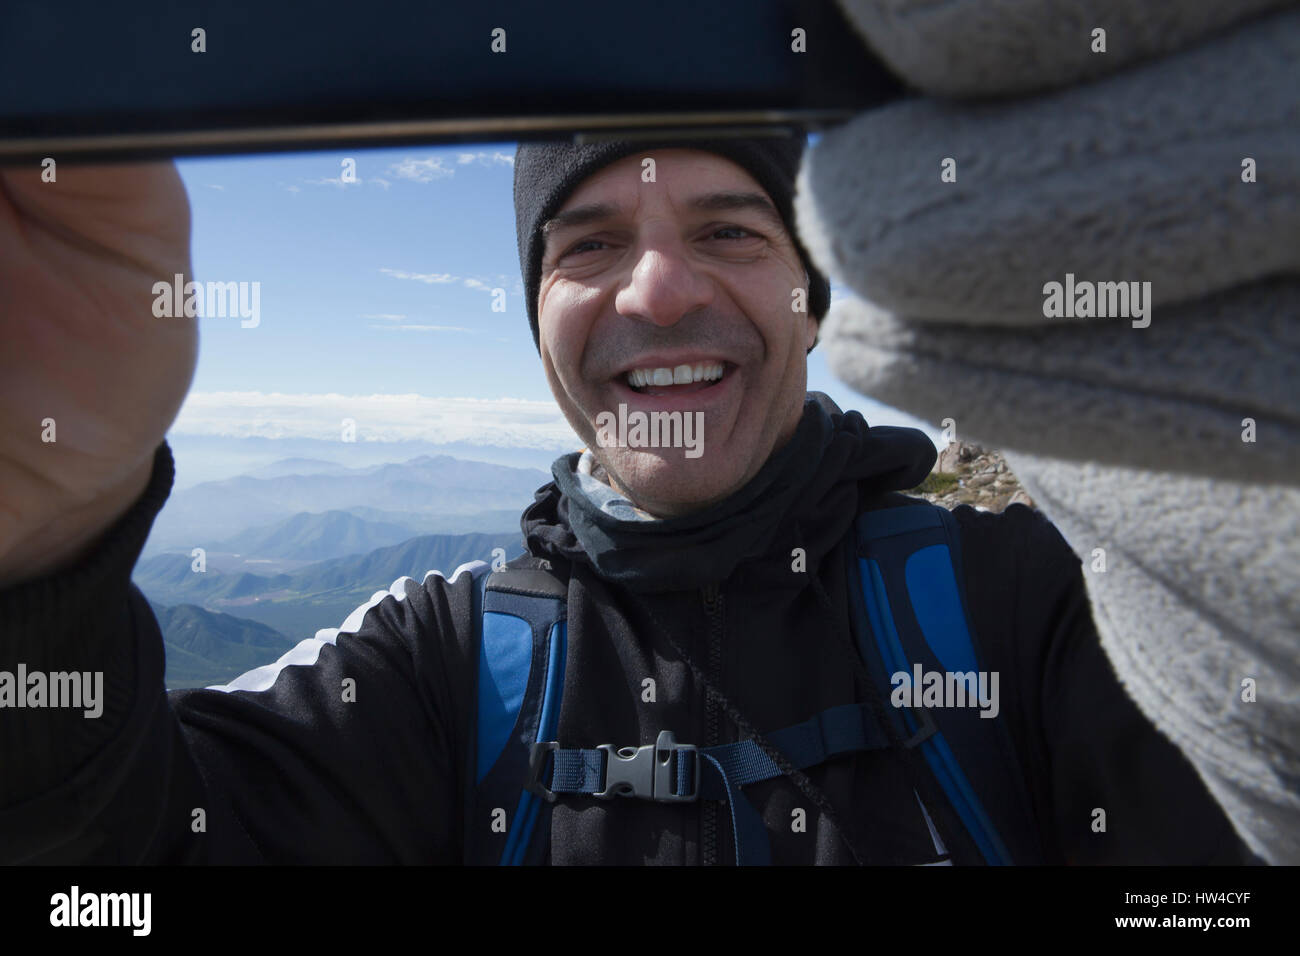 Hispanic man posing for cell phone selfie on mountain Stock Photo